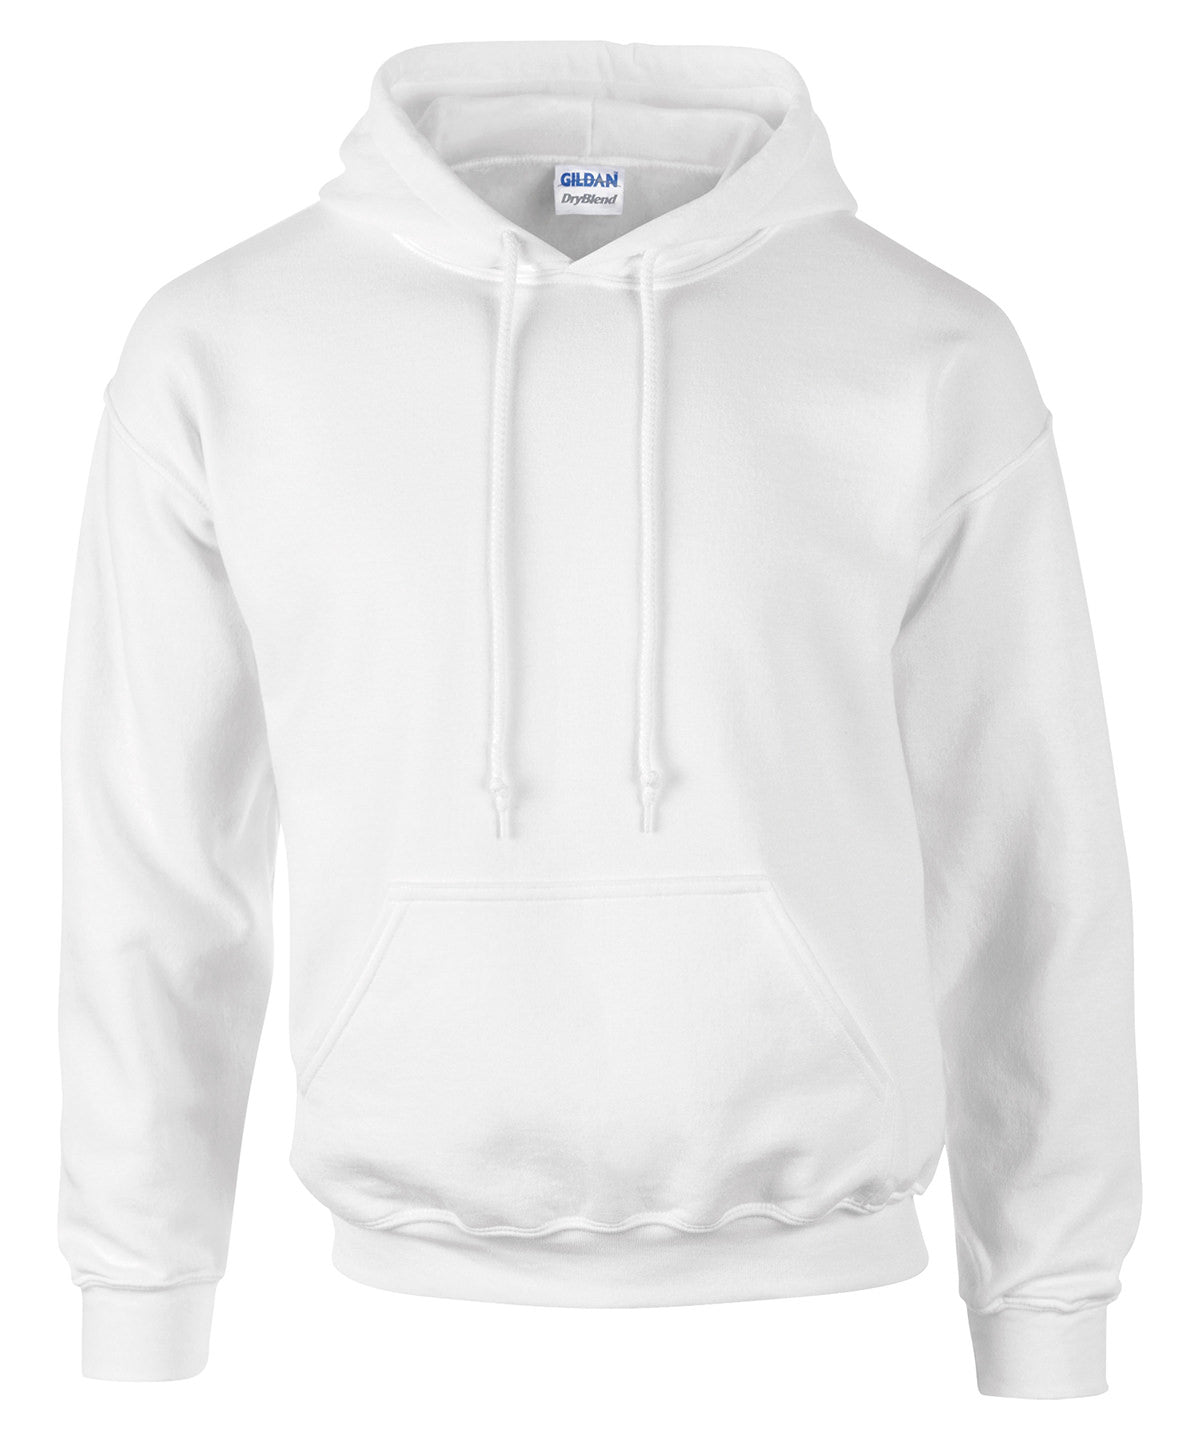 Gildan DryBlend adult hooded sweatshirt